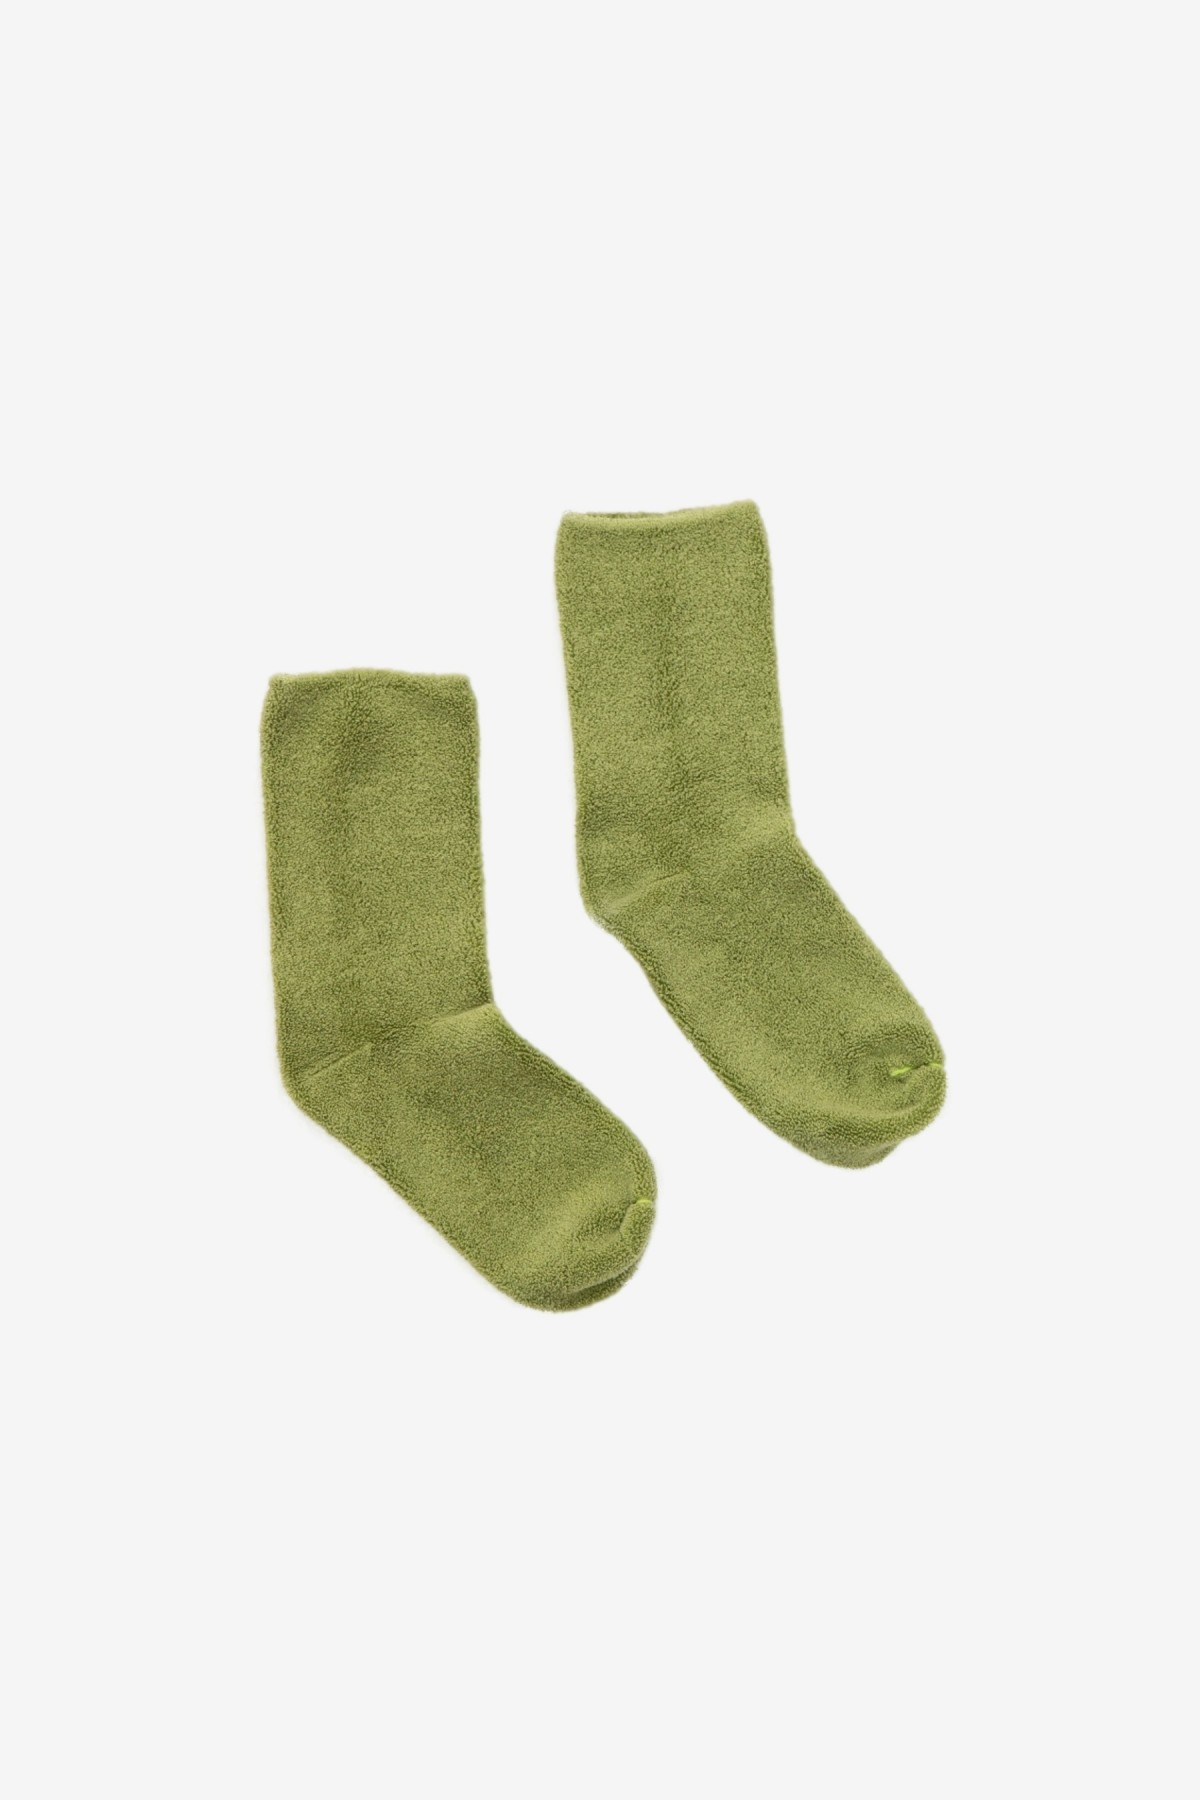 Baserange Buckle Overankle Socks - Size 36-39 in Mun Green